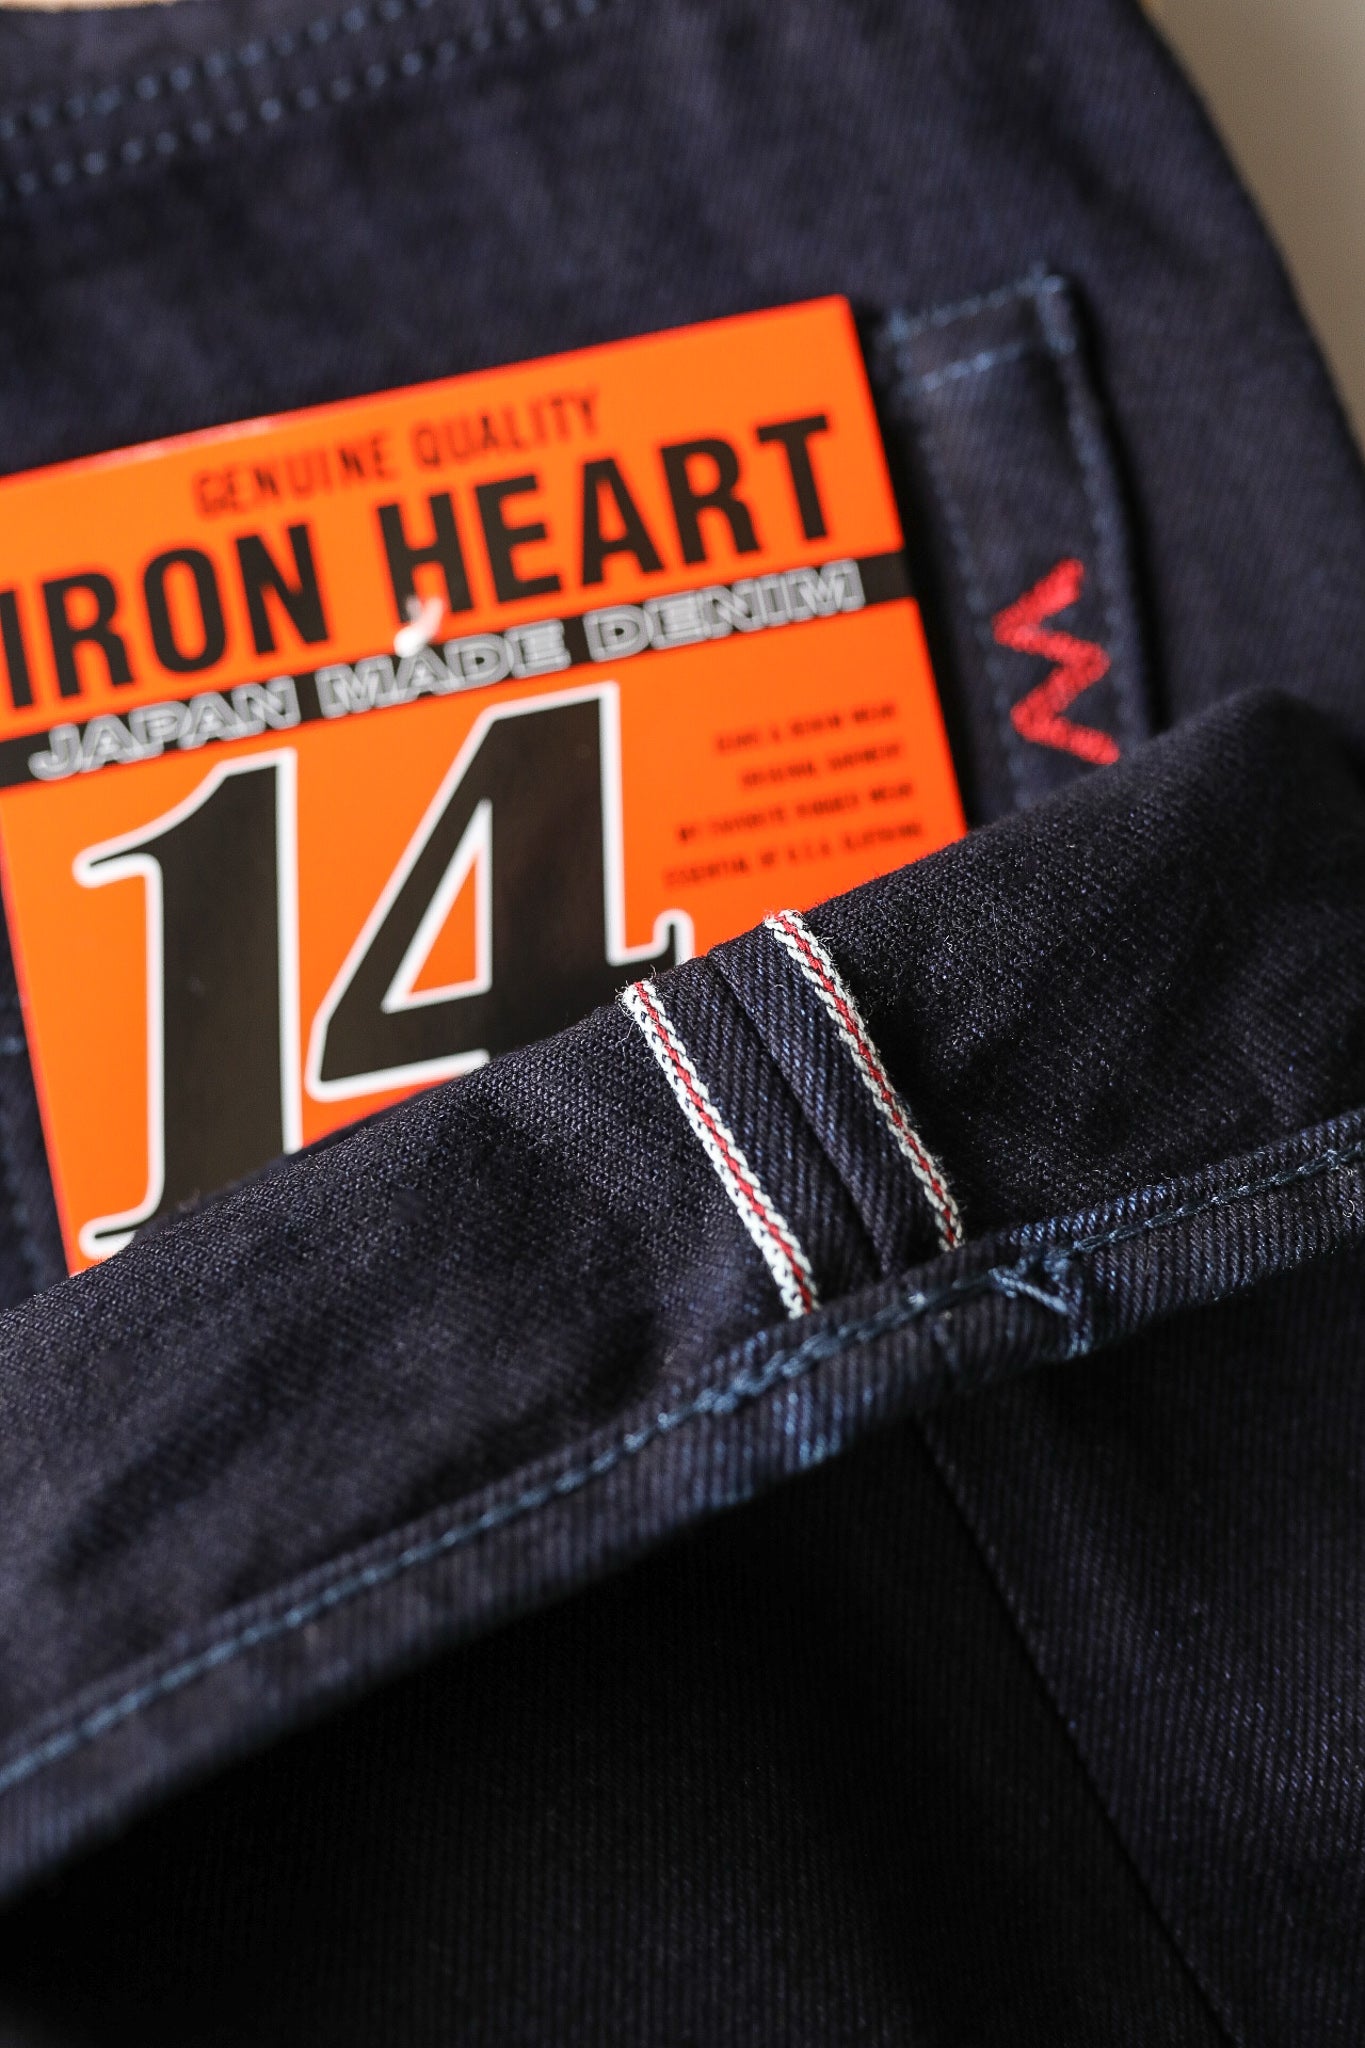 Iron Heart IH-666S-142od 14oz Selvedge Denim Slim Straight Cut Jeans -  Indigo Overdyed Black